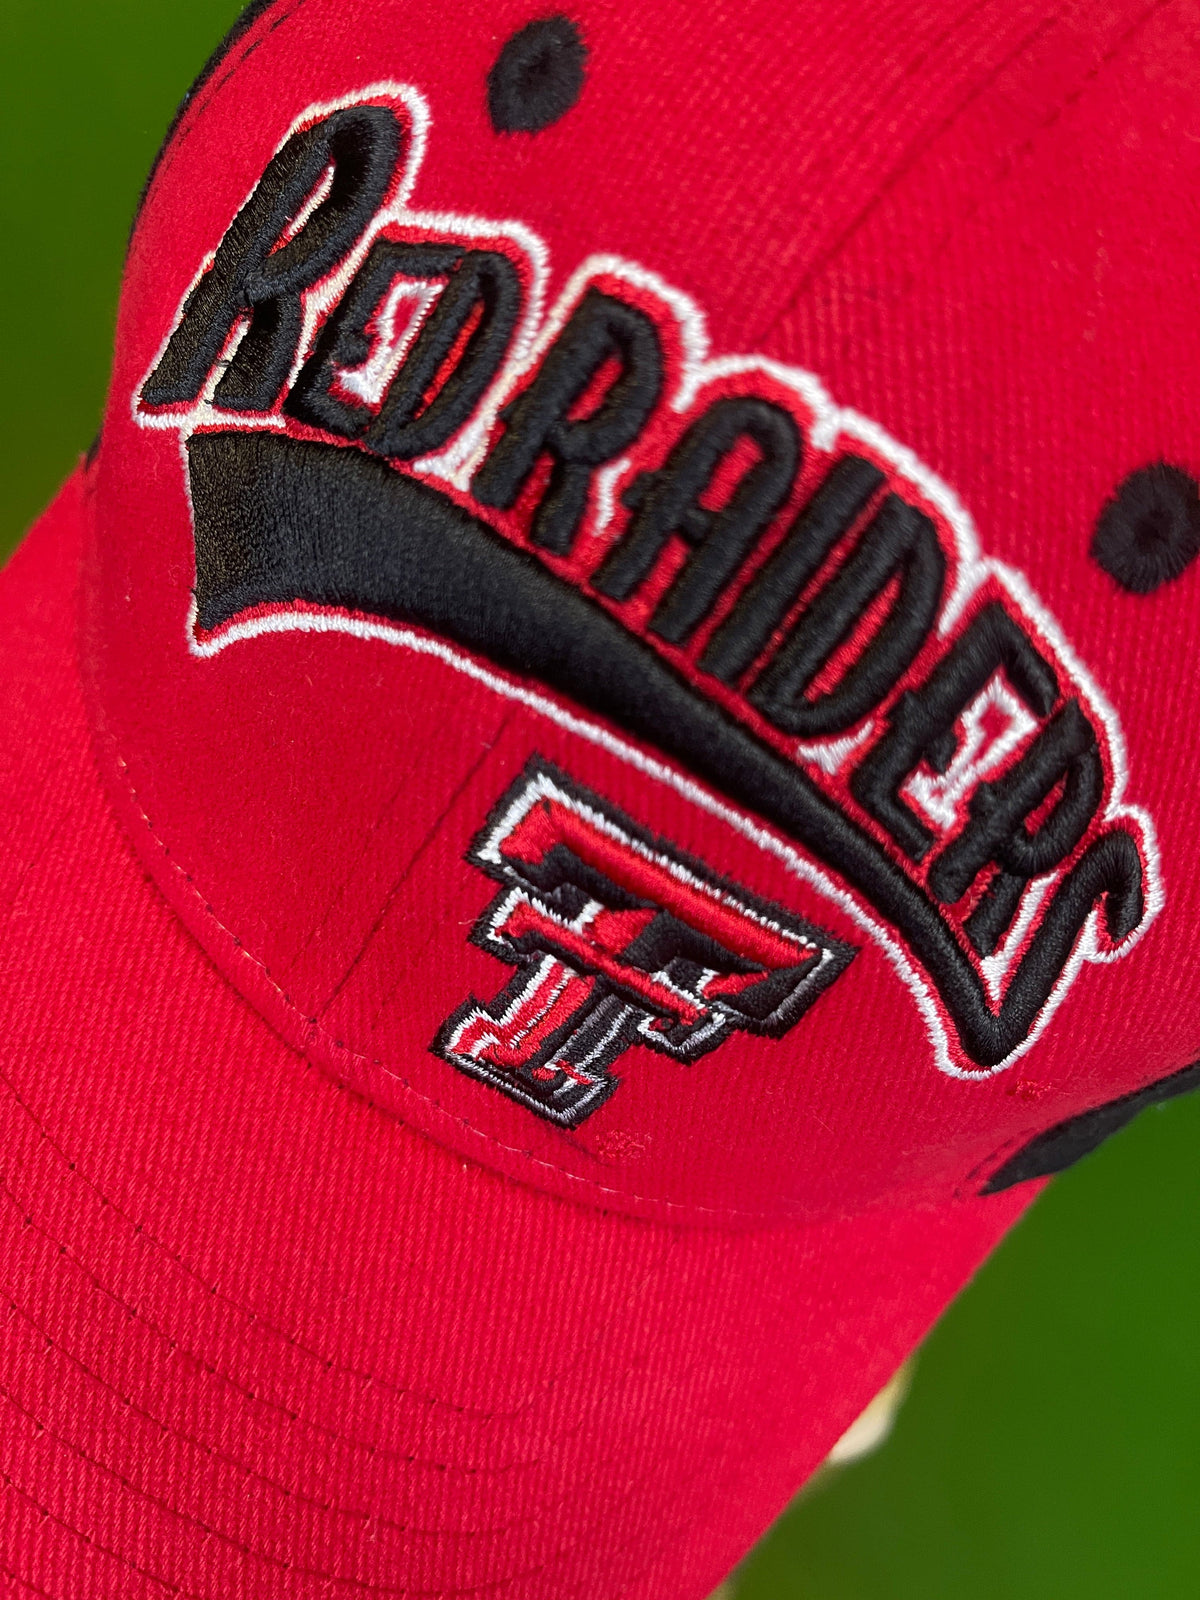 NCAA Texas Tech Red Raiders 100% Cotton Strapback Hat/Cap OSFM